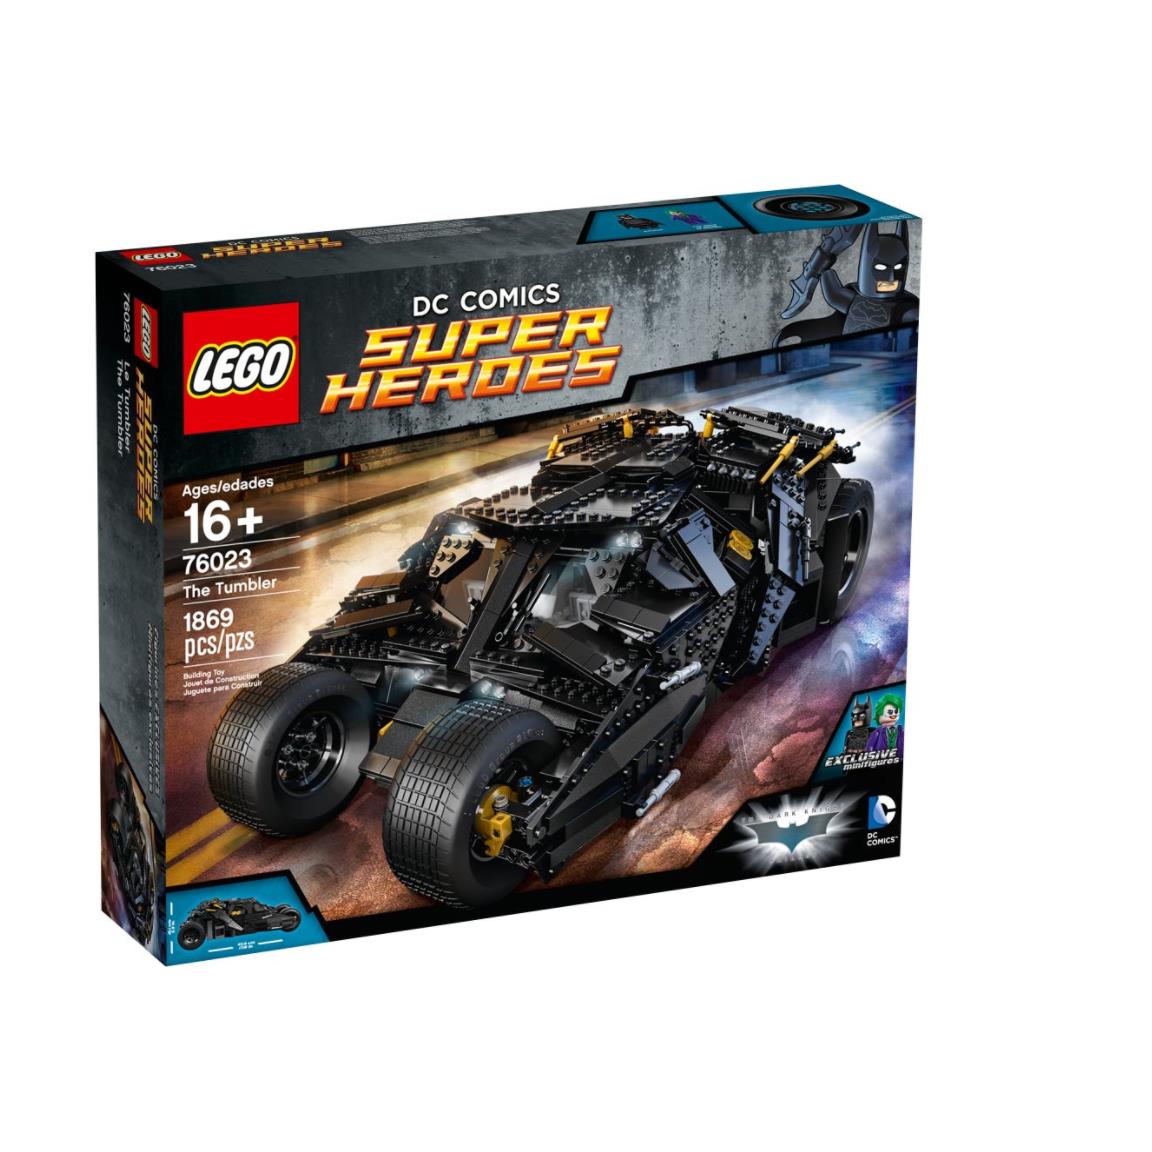 DC Super Heroes Lego - 76023 The Tumbler